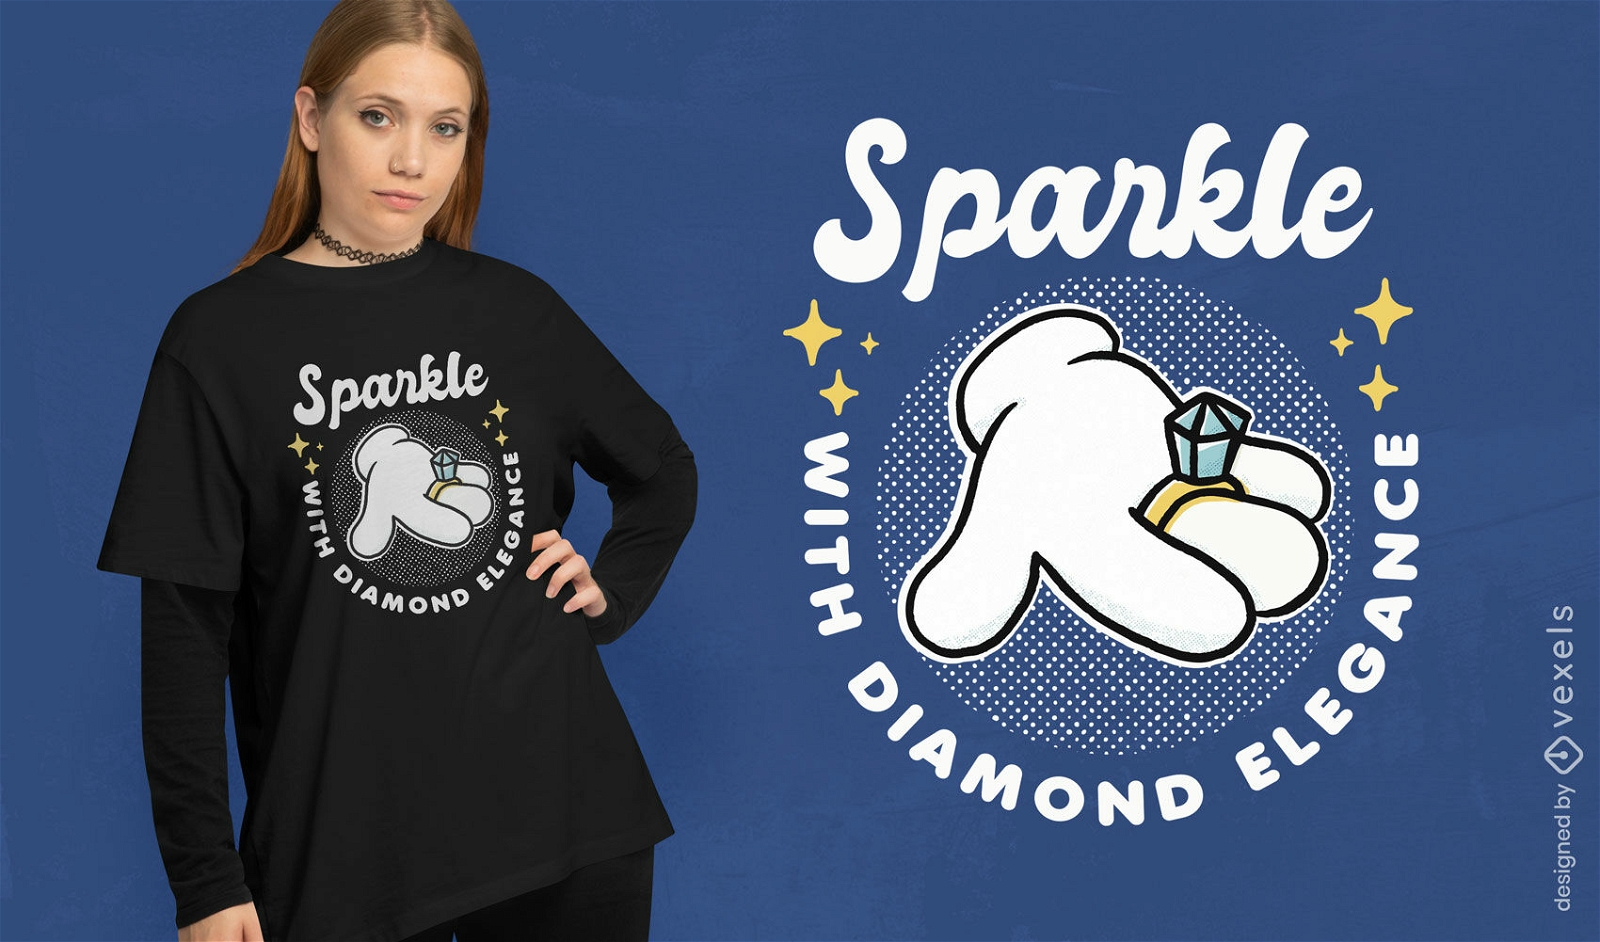 Sparkle with diamond elegance t-shirt design